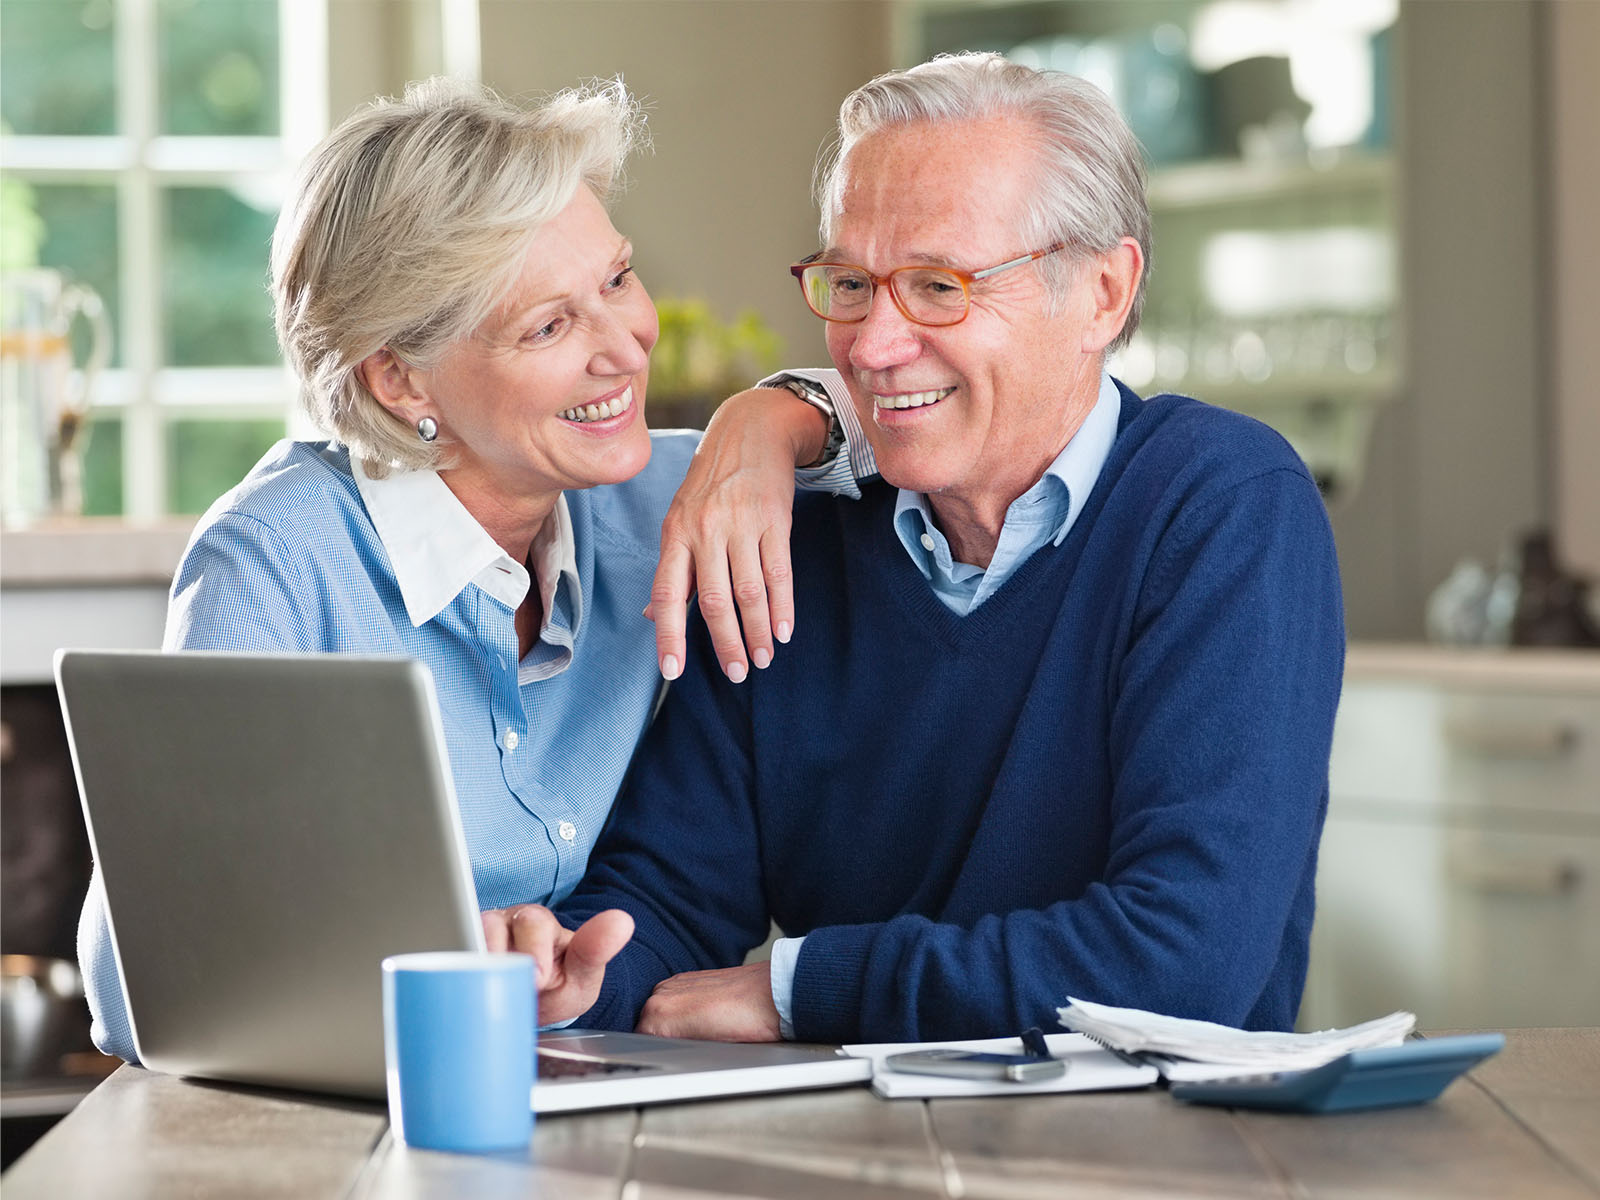 Senior couple smiling with laptop on kitchen table.